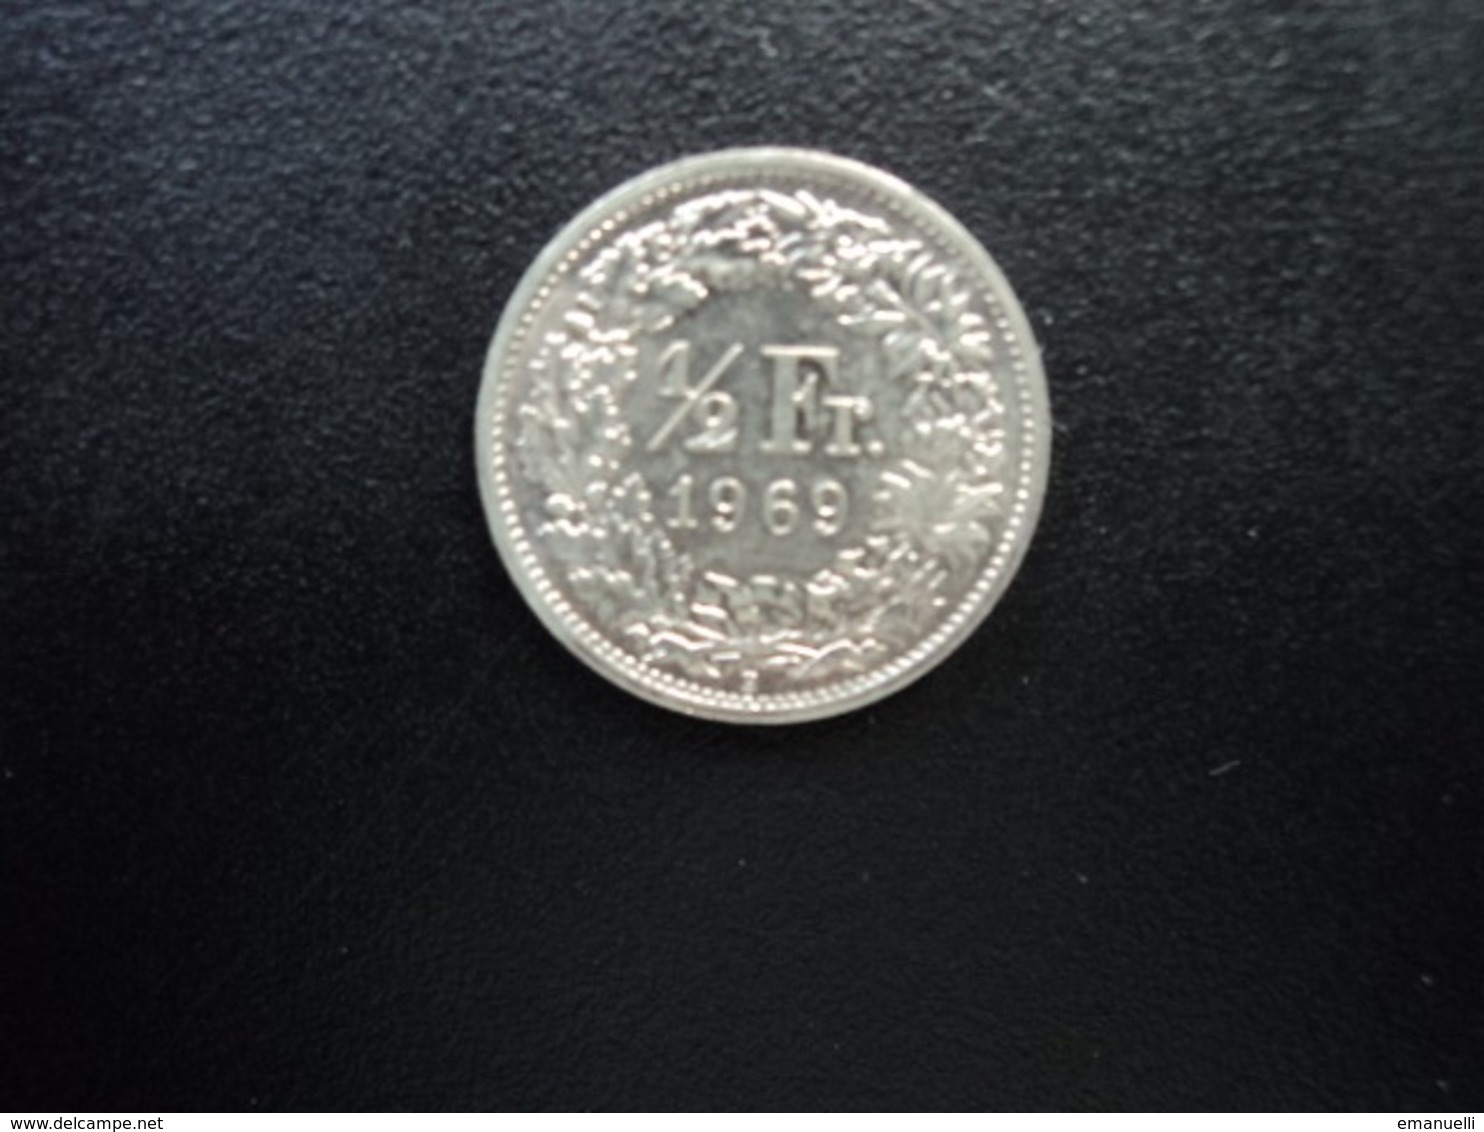 SUISSE : 1/2 FRANC   1969 B    KM 23a.1      SUP+ - 1/2 Franken